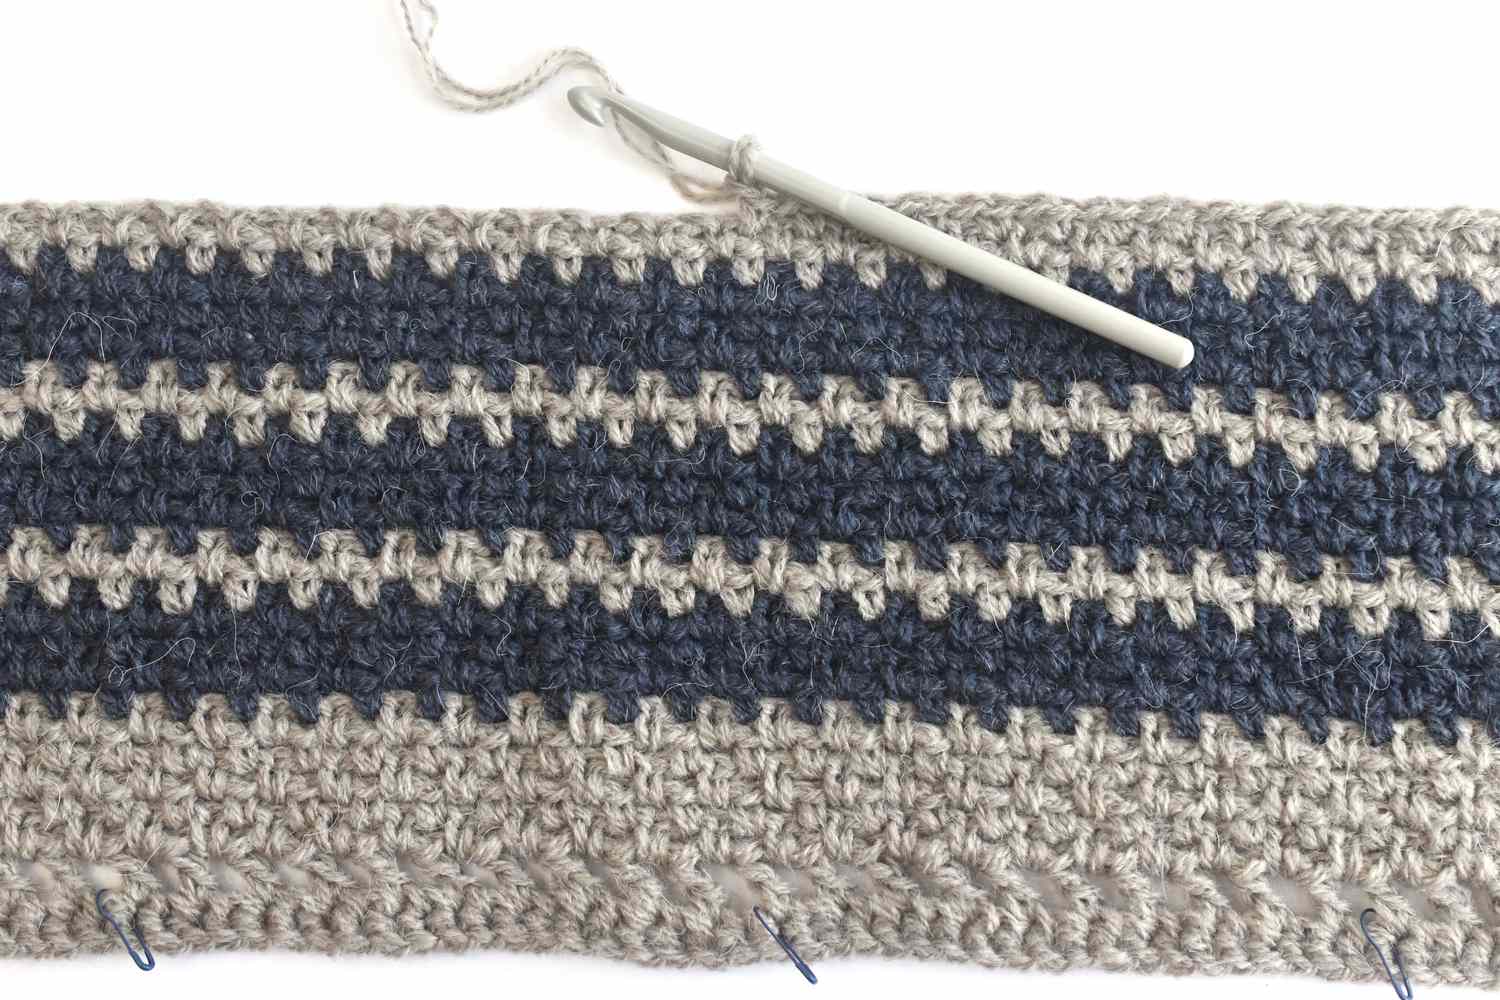 Crochet Rows of Moss Stitch